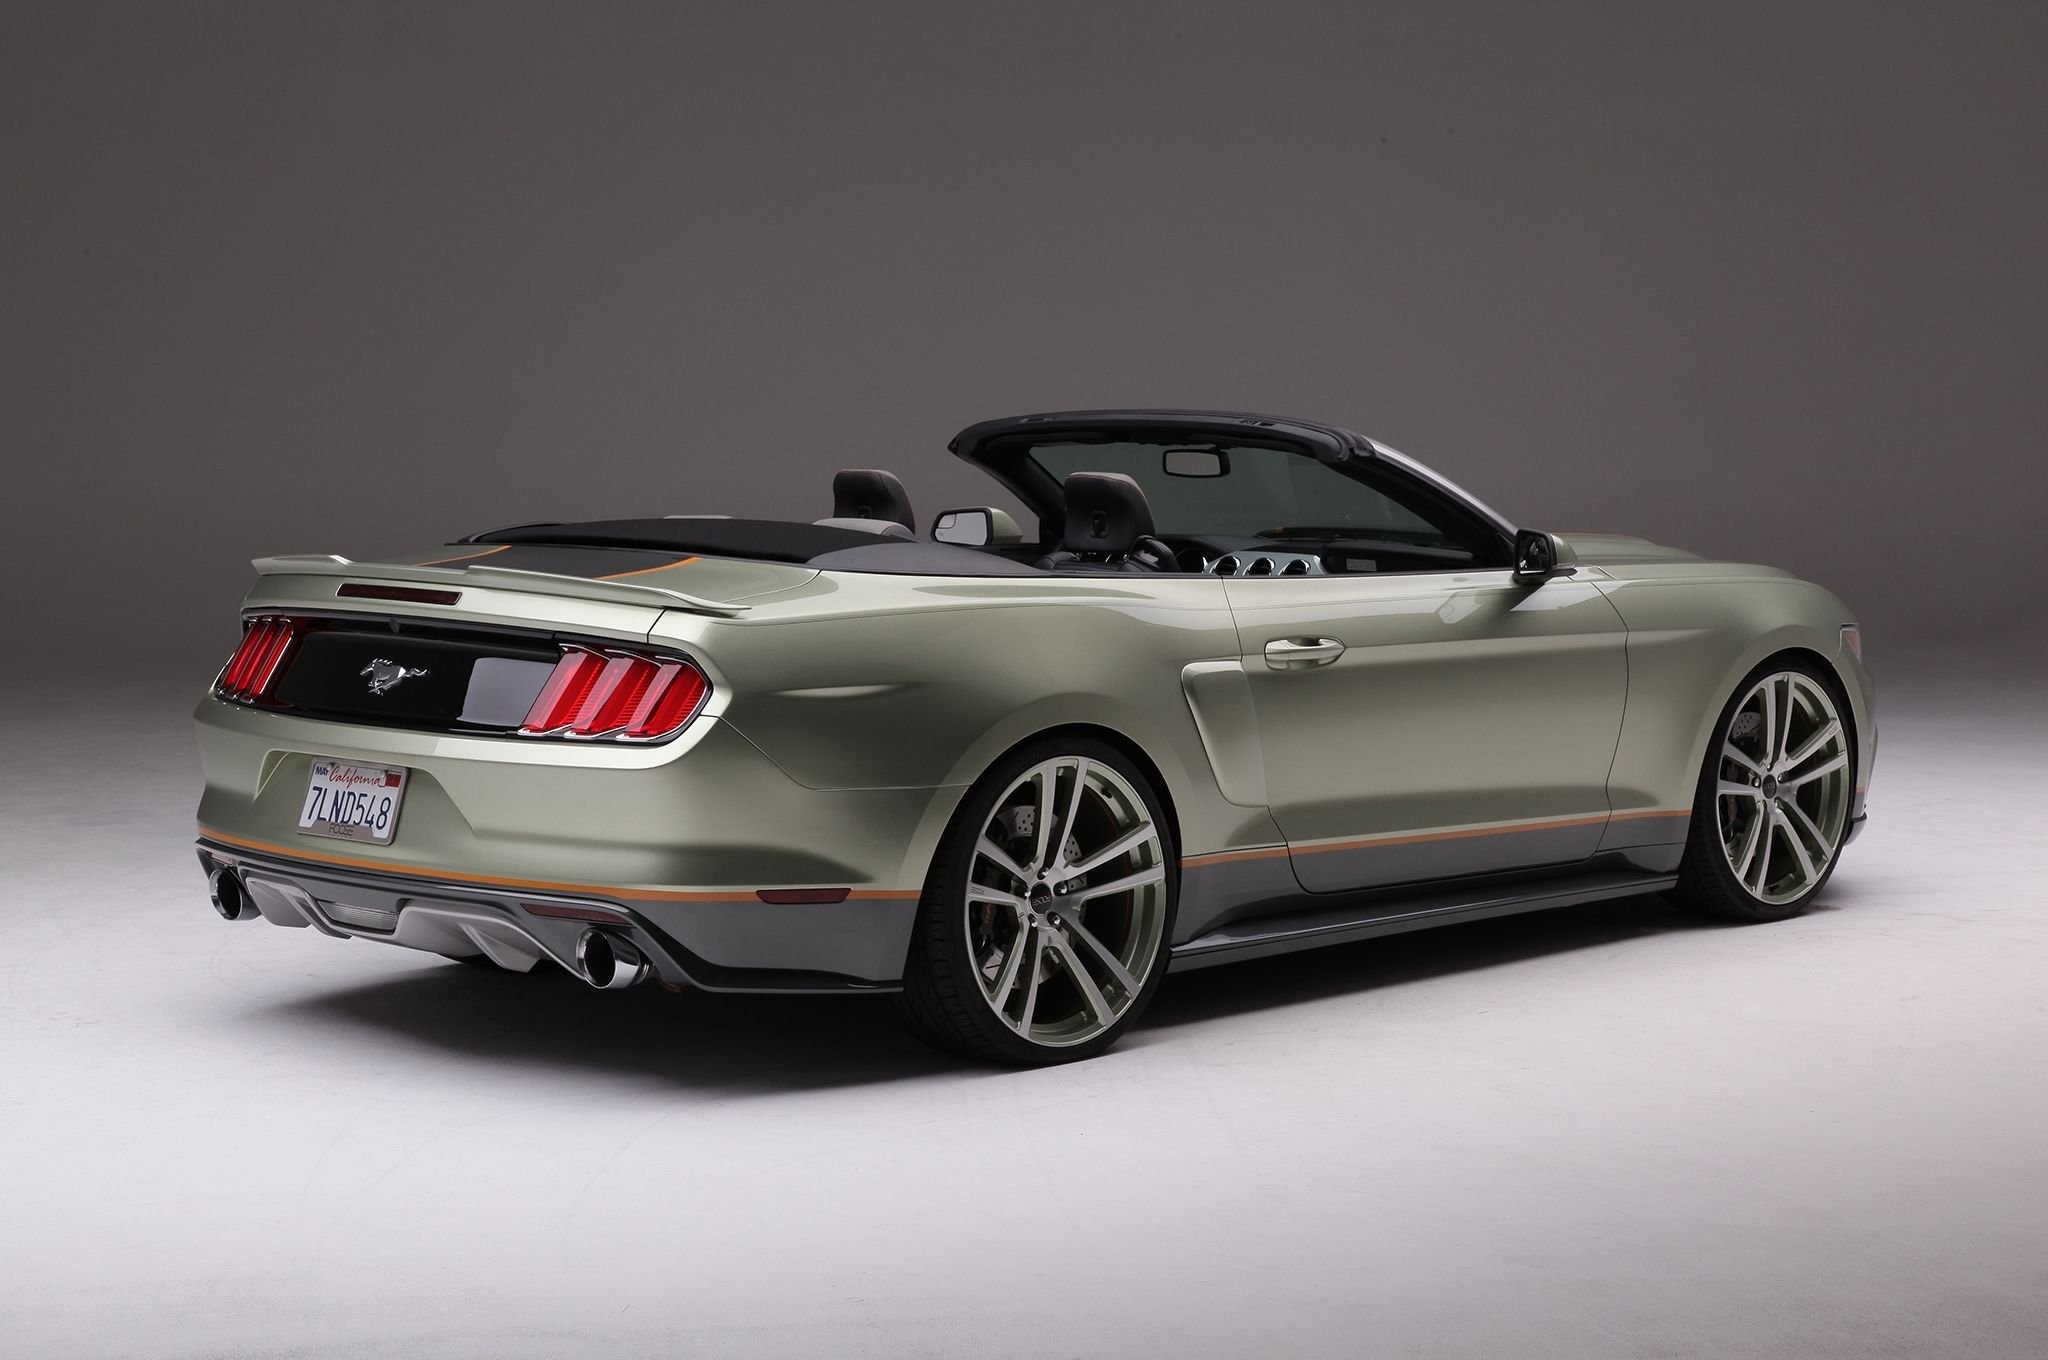 2015 Mustang S550 Convertible Cars Modified Chip Foose Wallpaper 2048x1360 927712 Wallpaperup 2048x1360